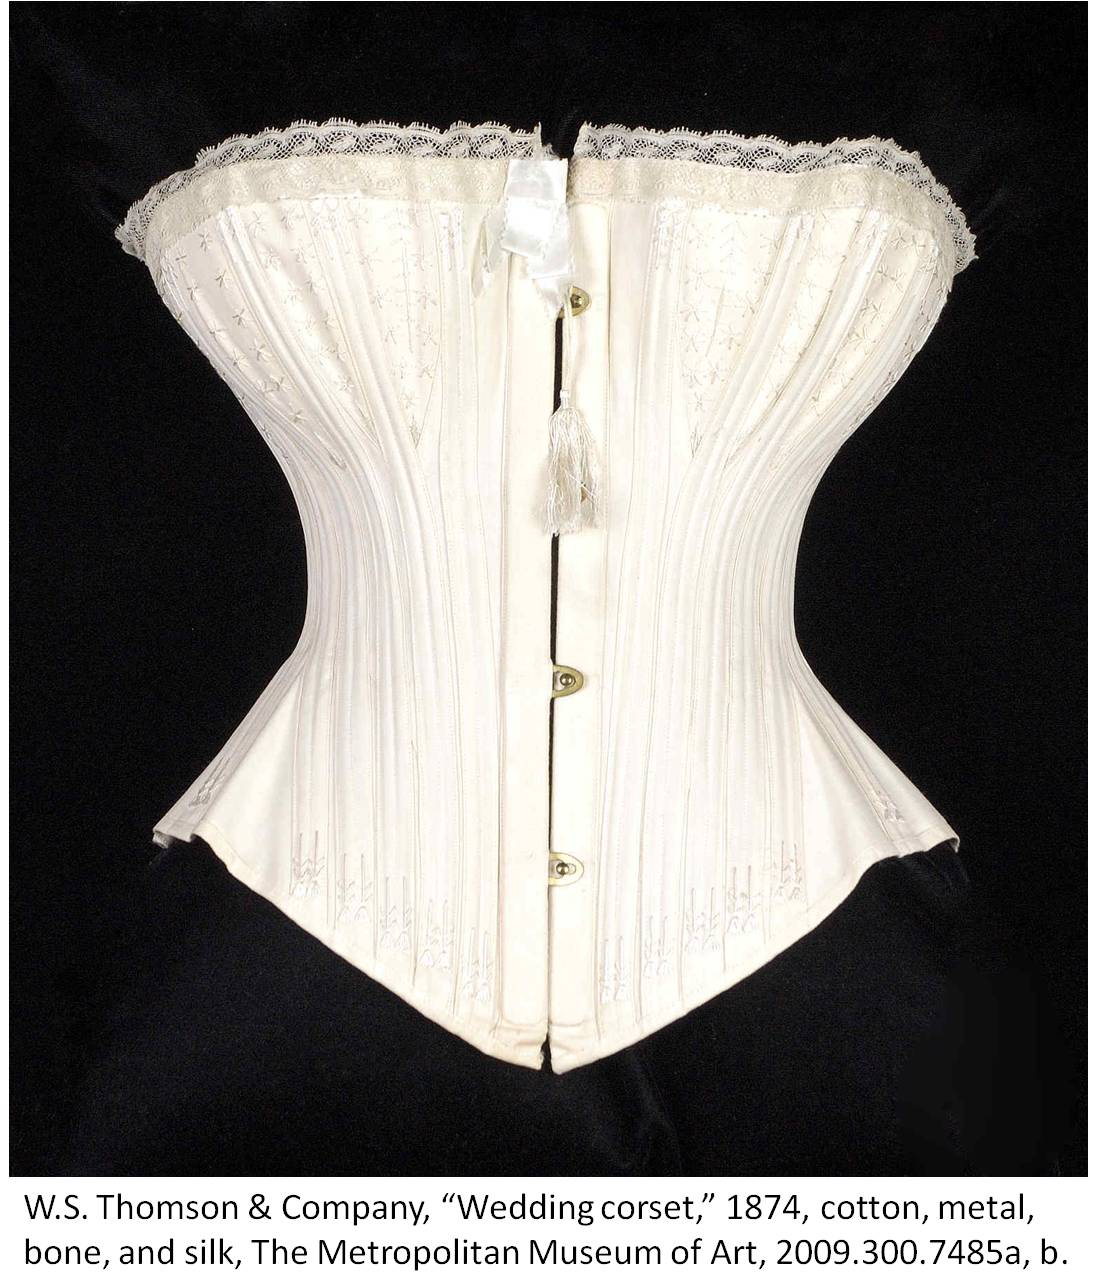 W.S. Thomson & Company, “Wedding corset,” 1874, British, cotton, metal, bone, silk, The Metropolitan Museum of Art, 2009.300.7485a, b.